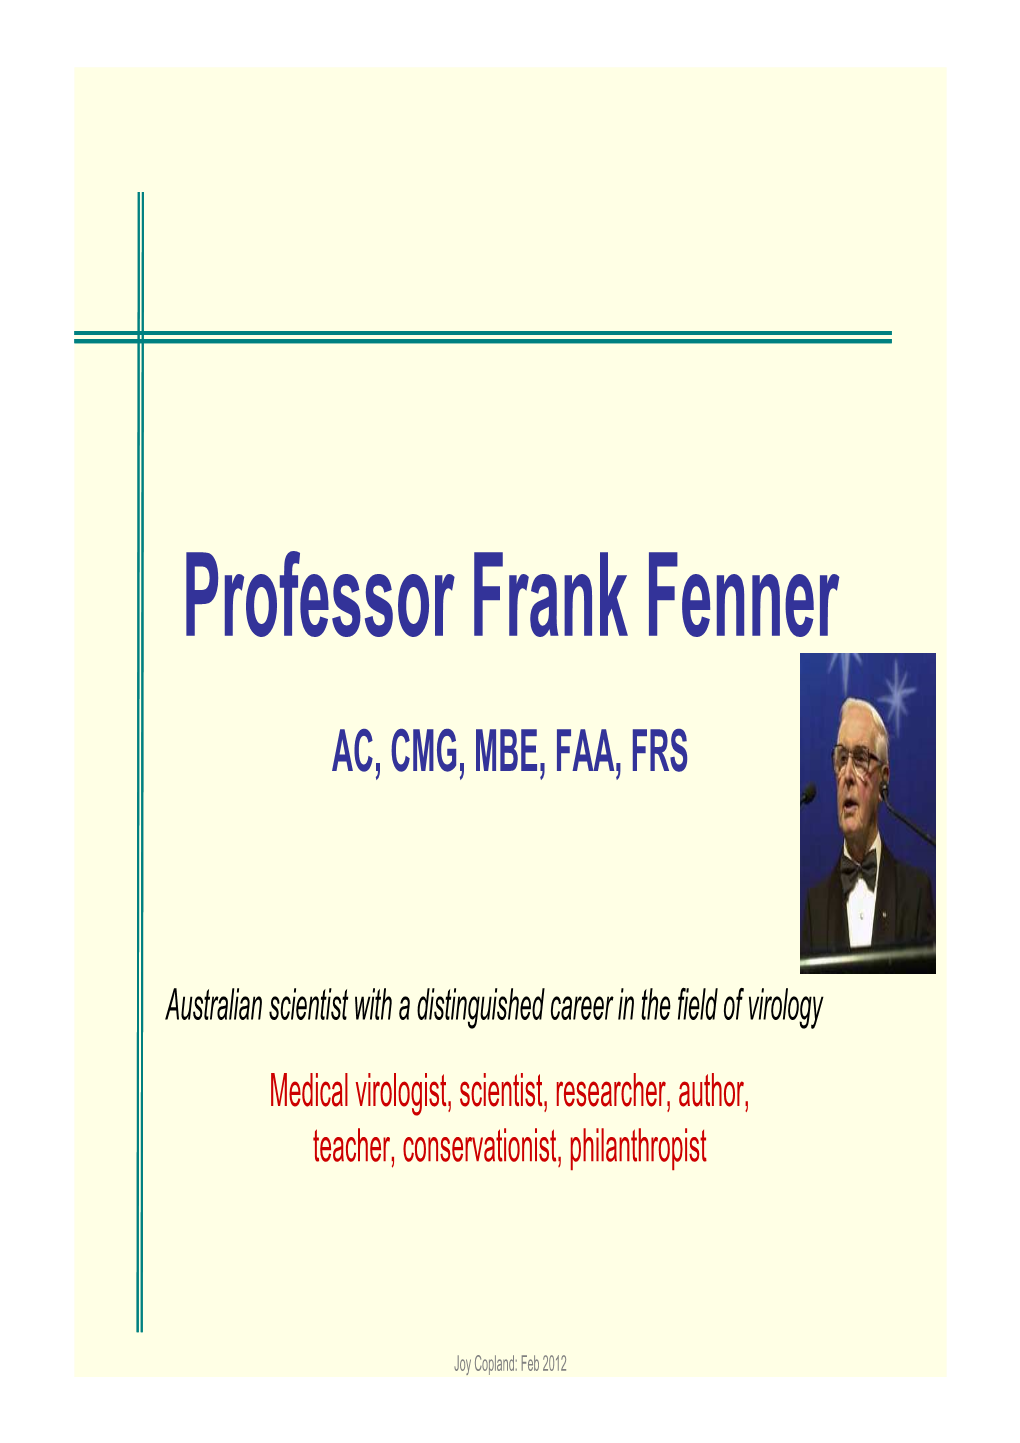 Professor Frank Fenner